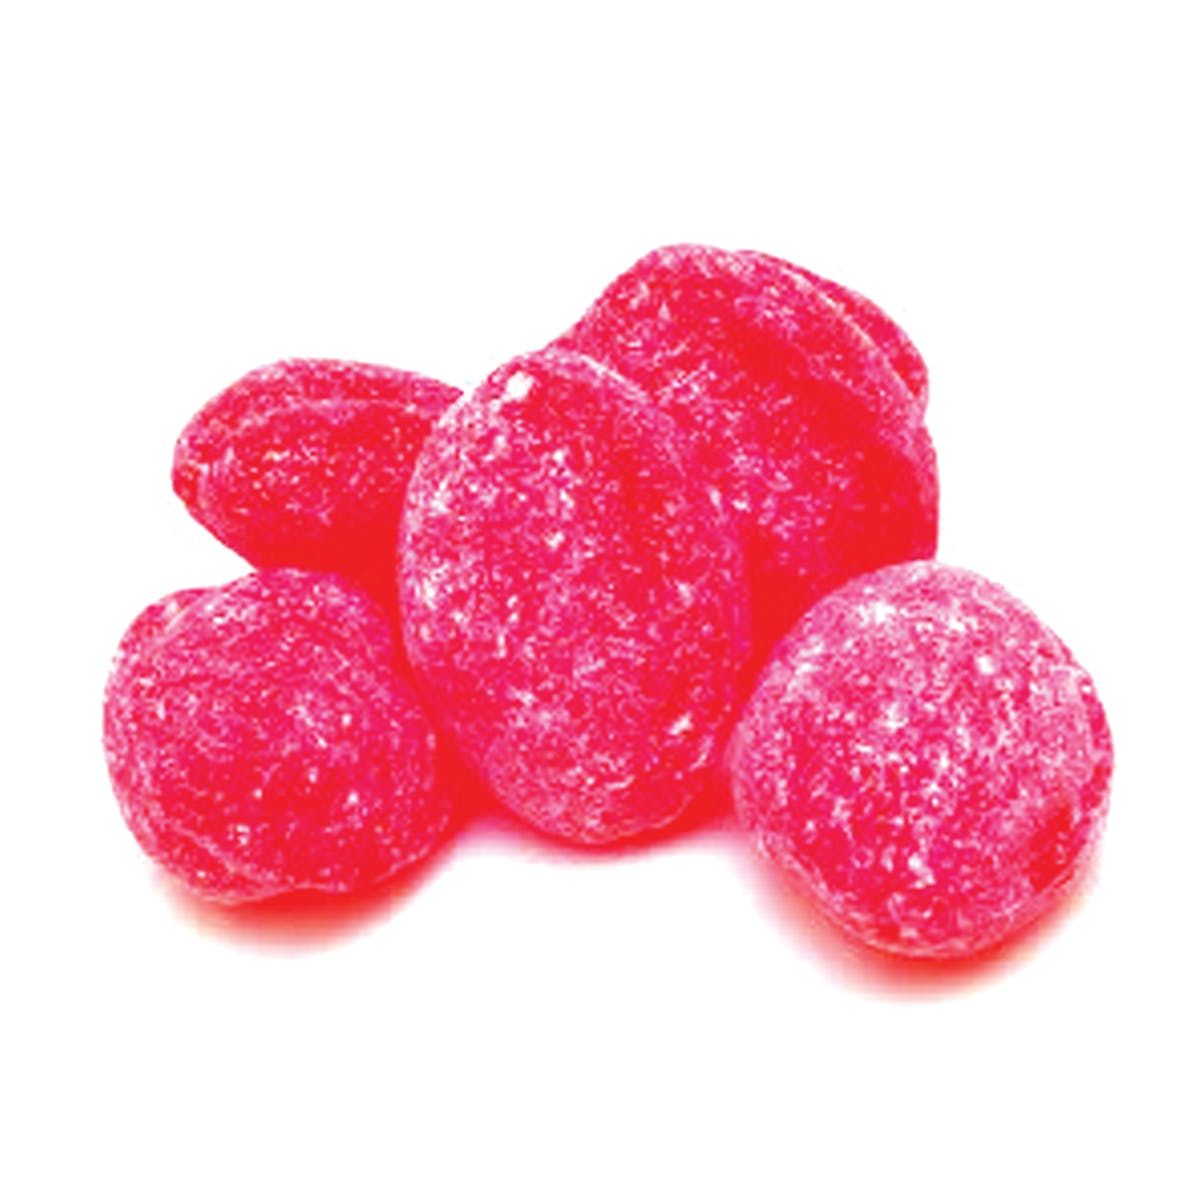 edible-wild-cherry-drops-100mg